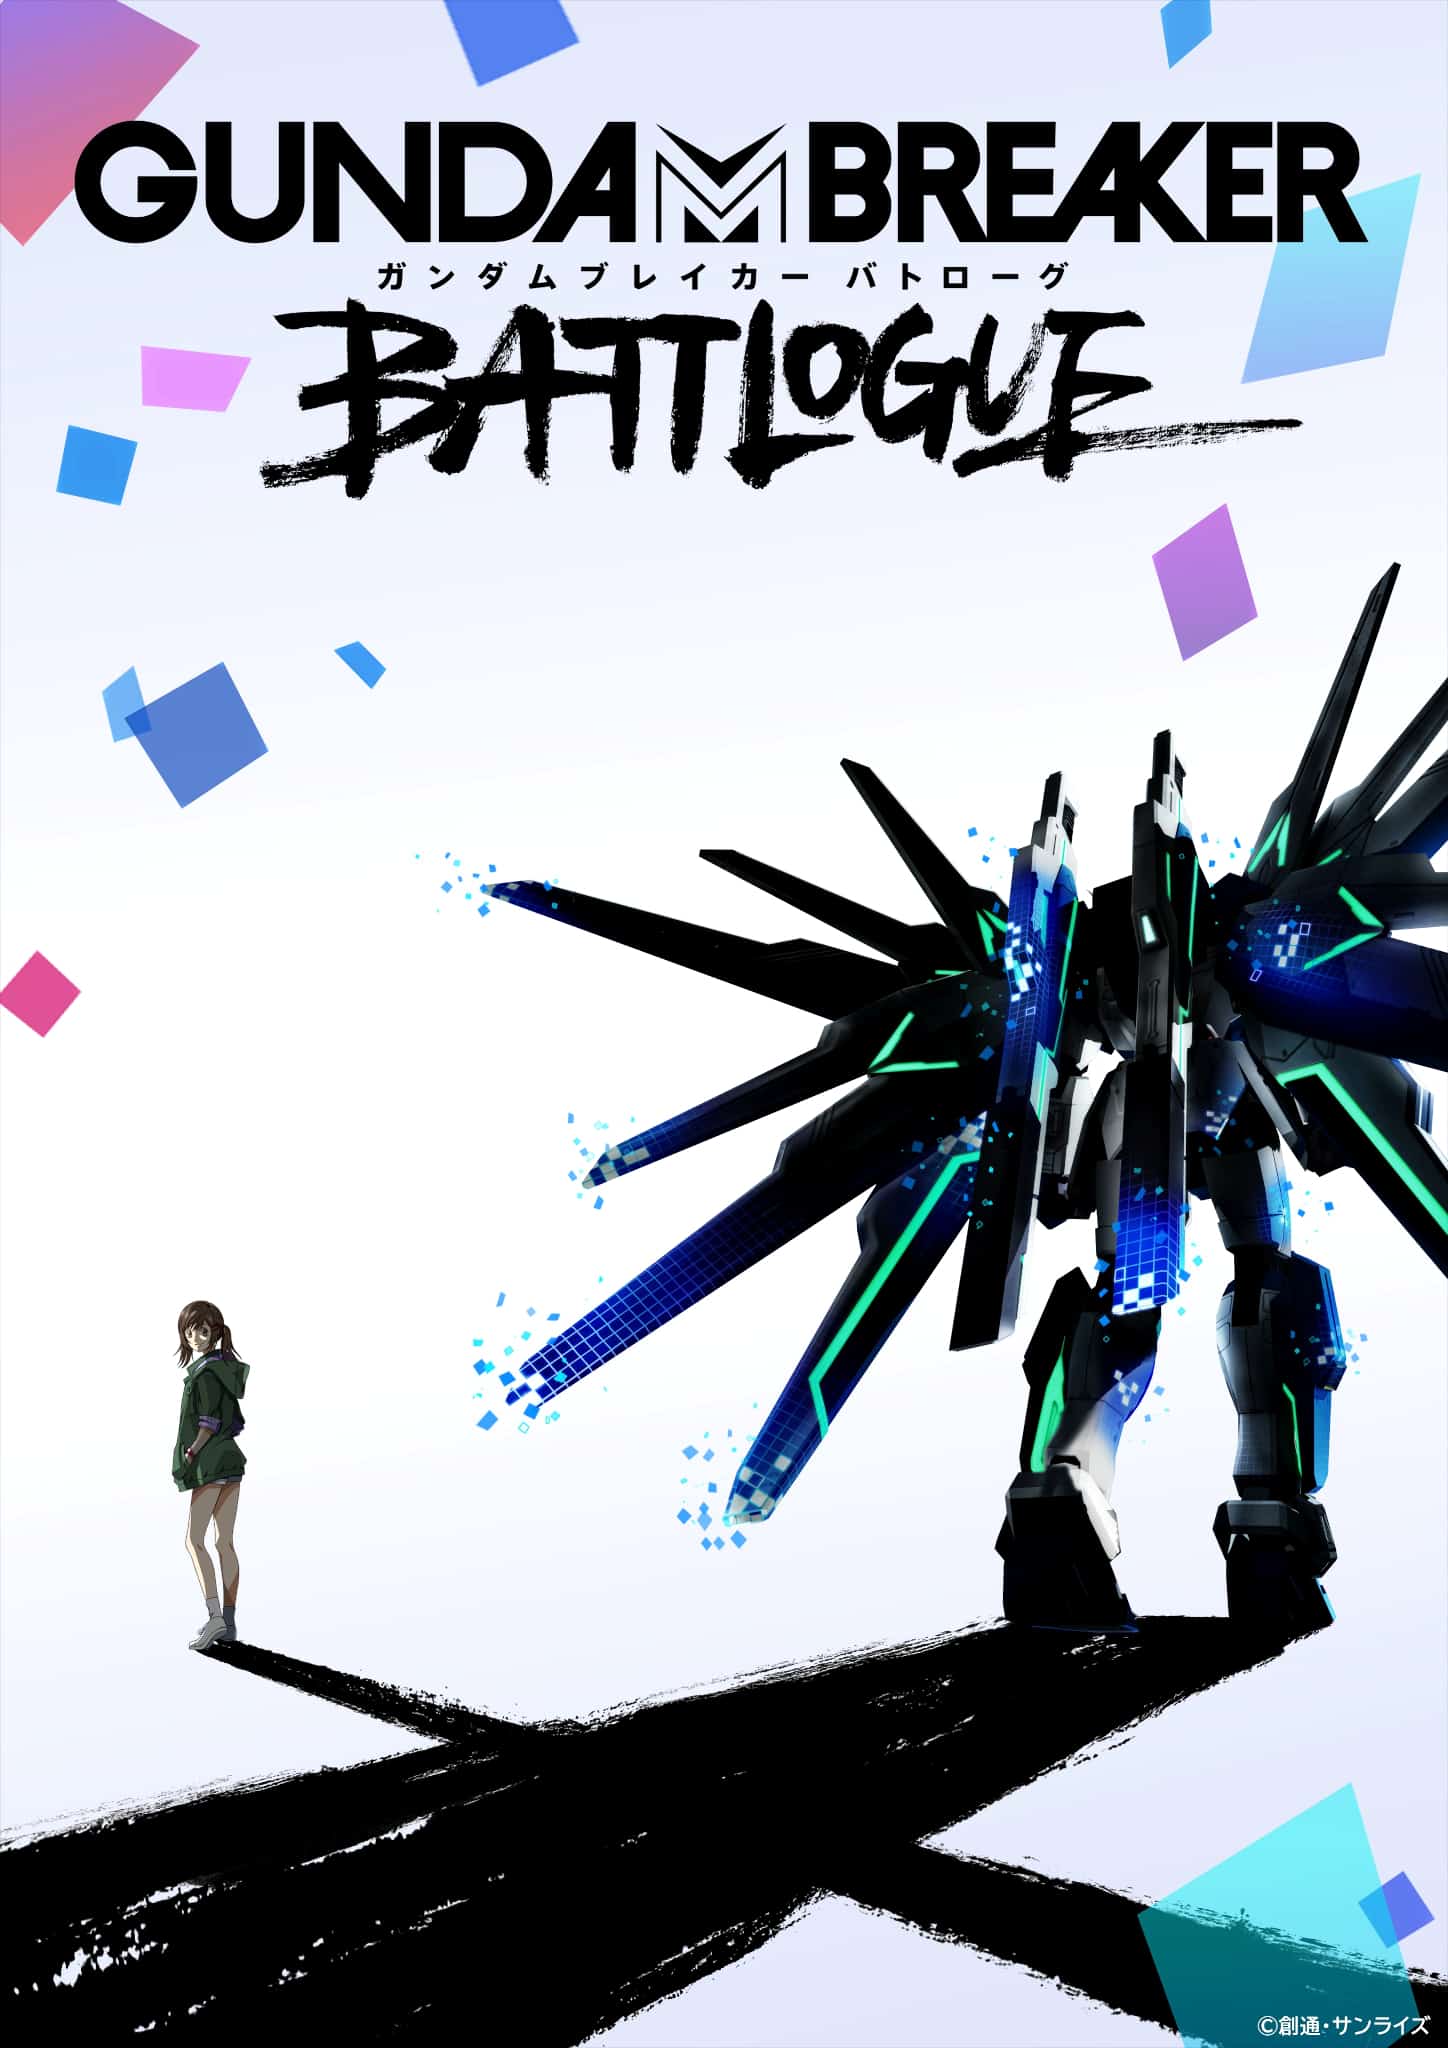 Premier visuel pour anime Gundam Breaker Battlogue